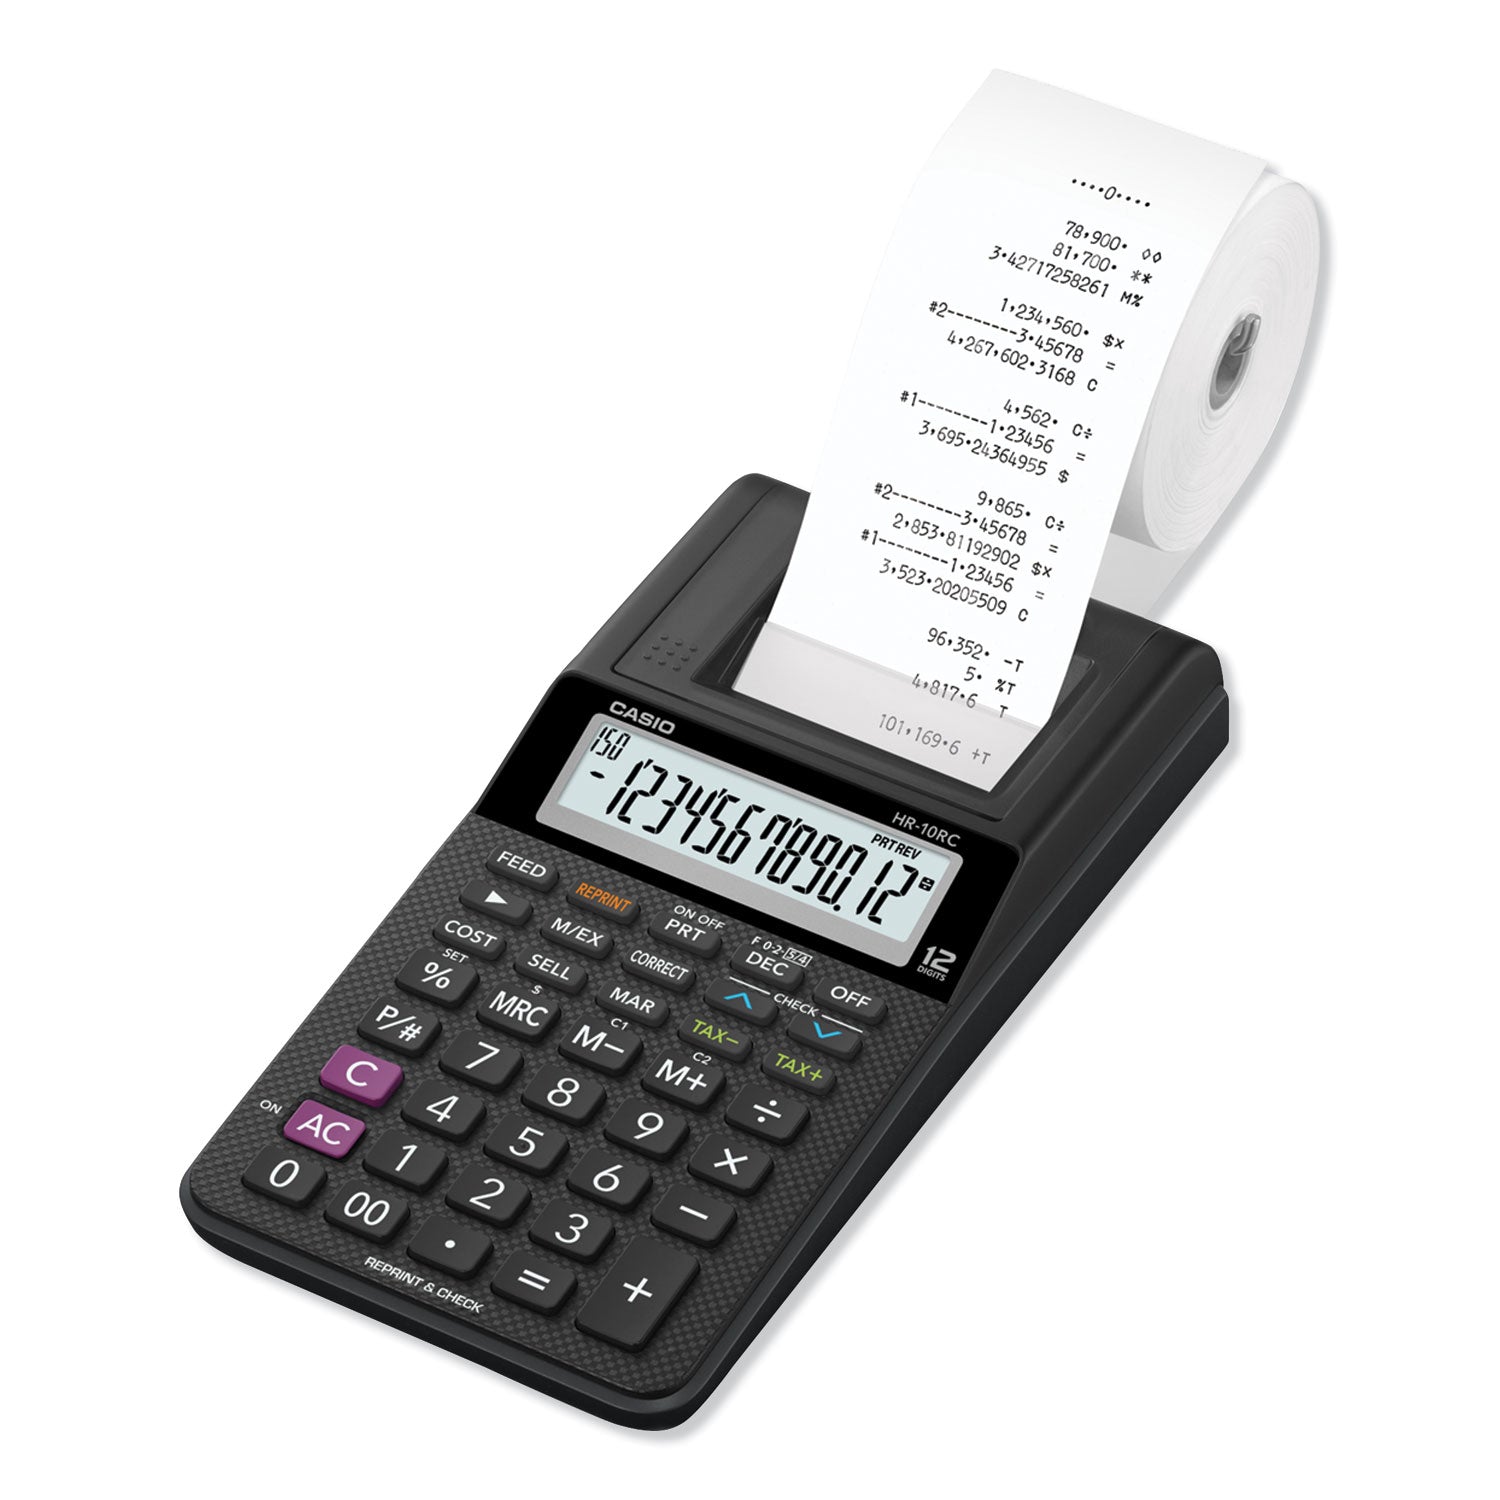 hr-10rc-handheld-portable-printing-calculator-black-print-16-lines-sec_csohr10rc - 2